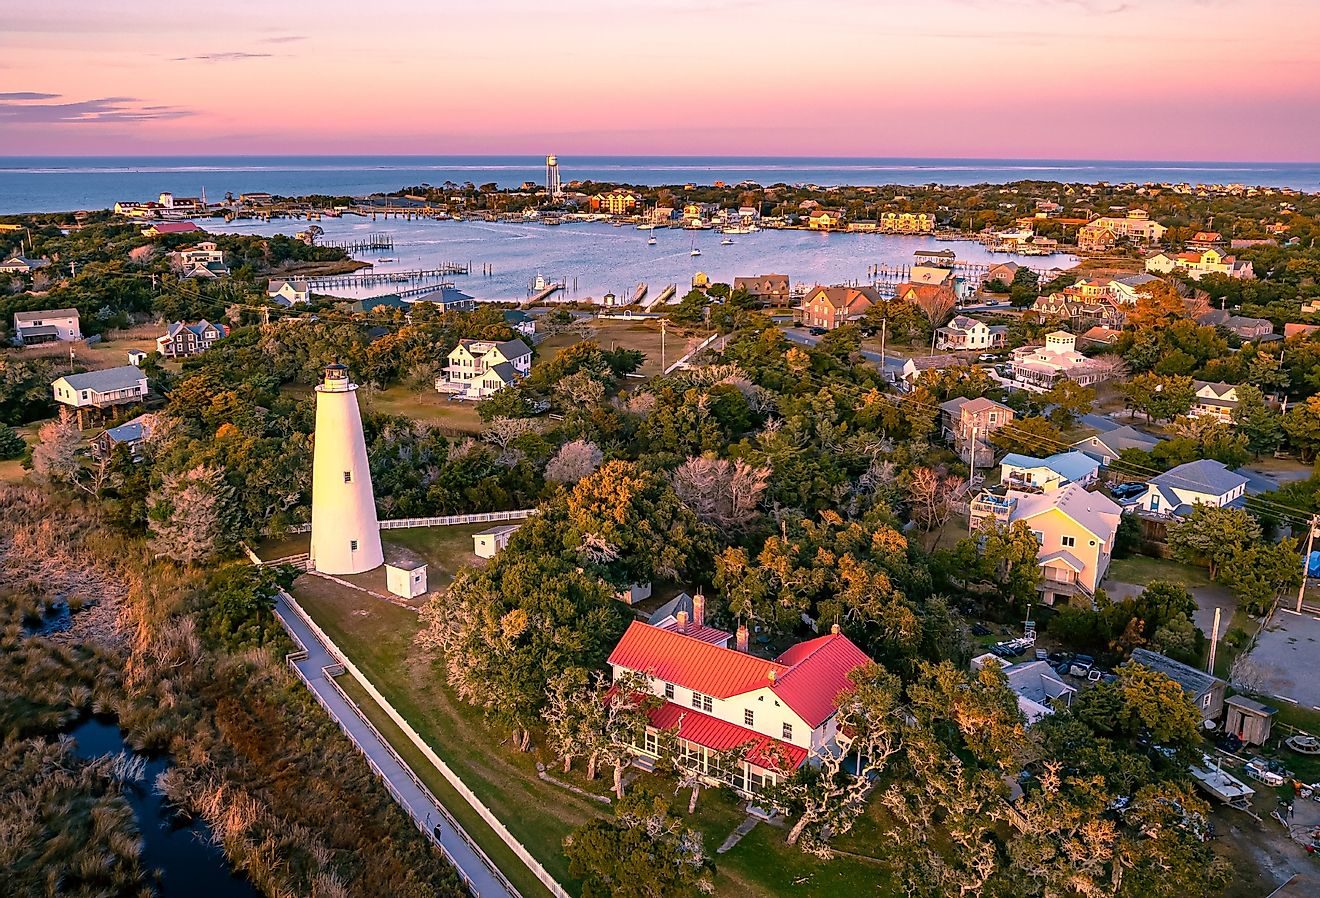 Aerial view of Ocracoke Lighthouse on Ocracoke Island, North Carolina at sunset.